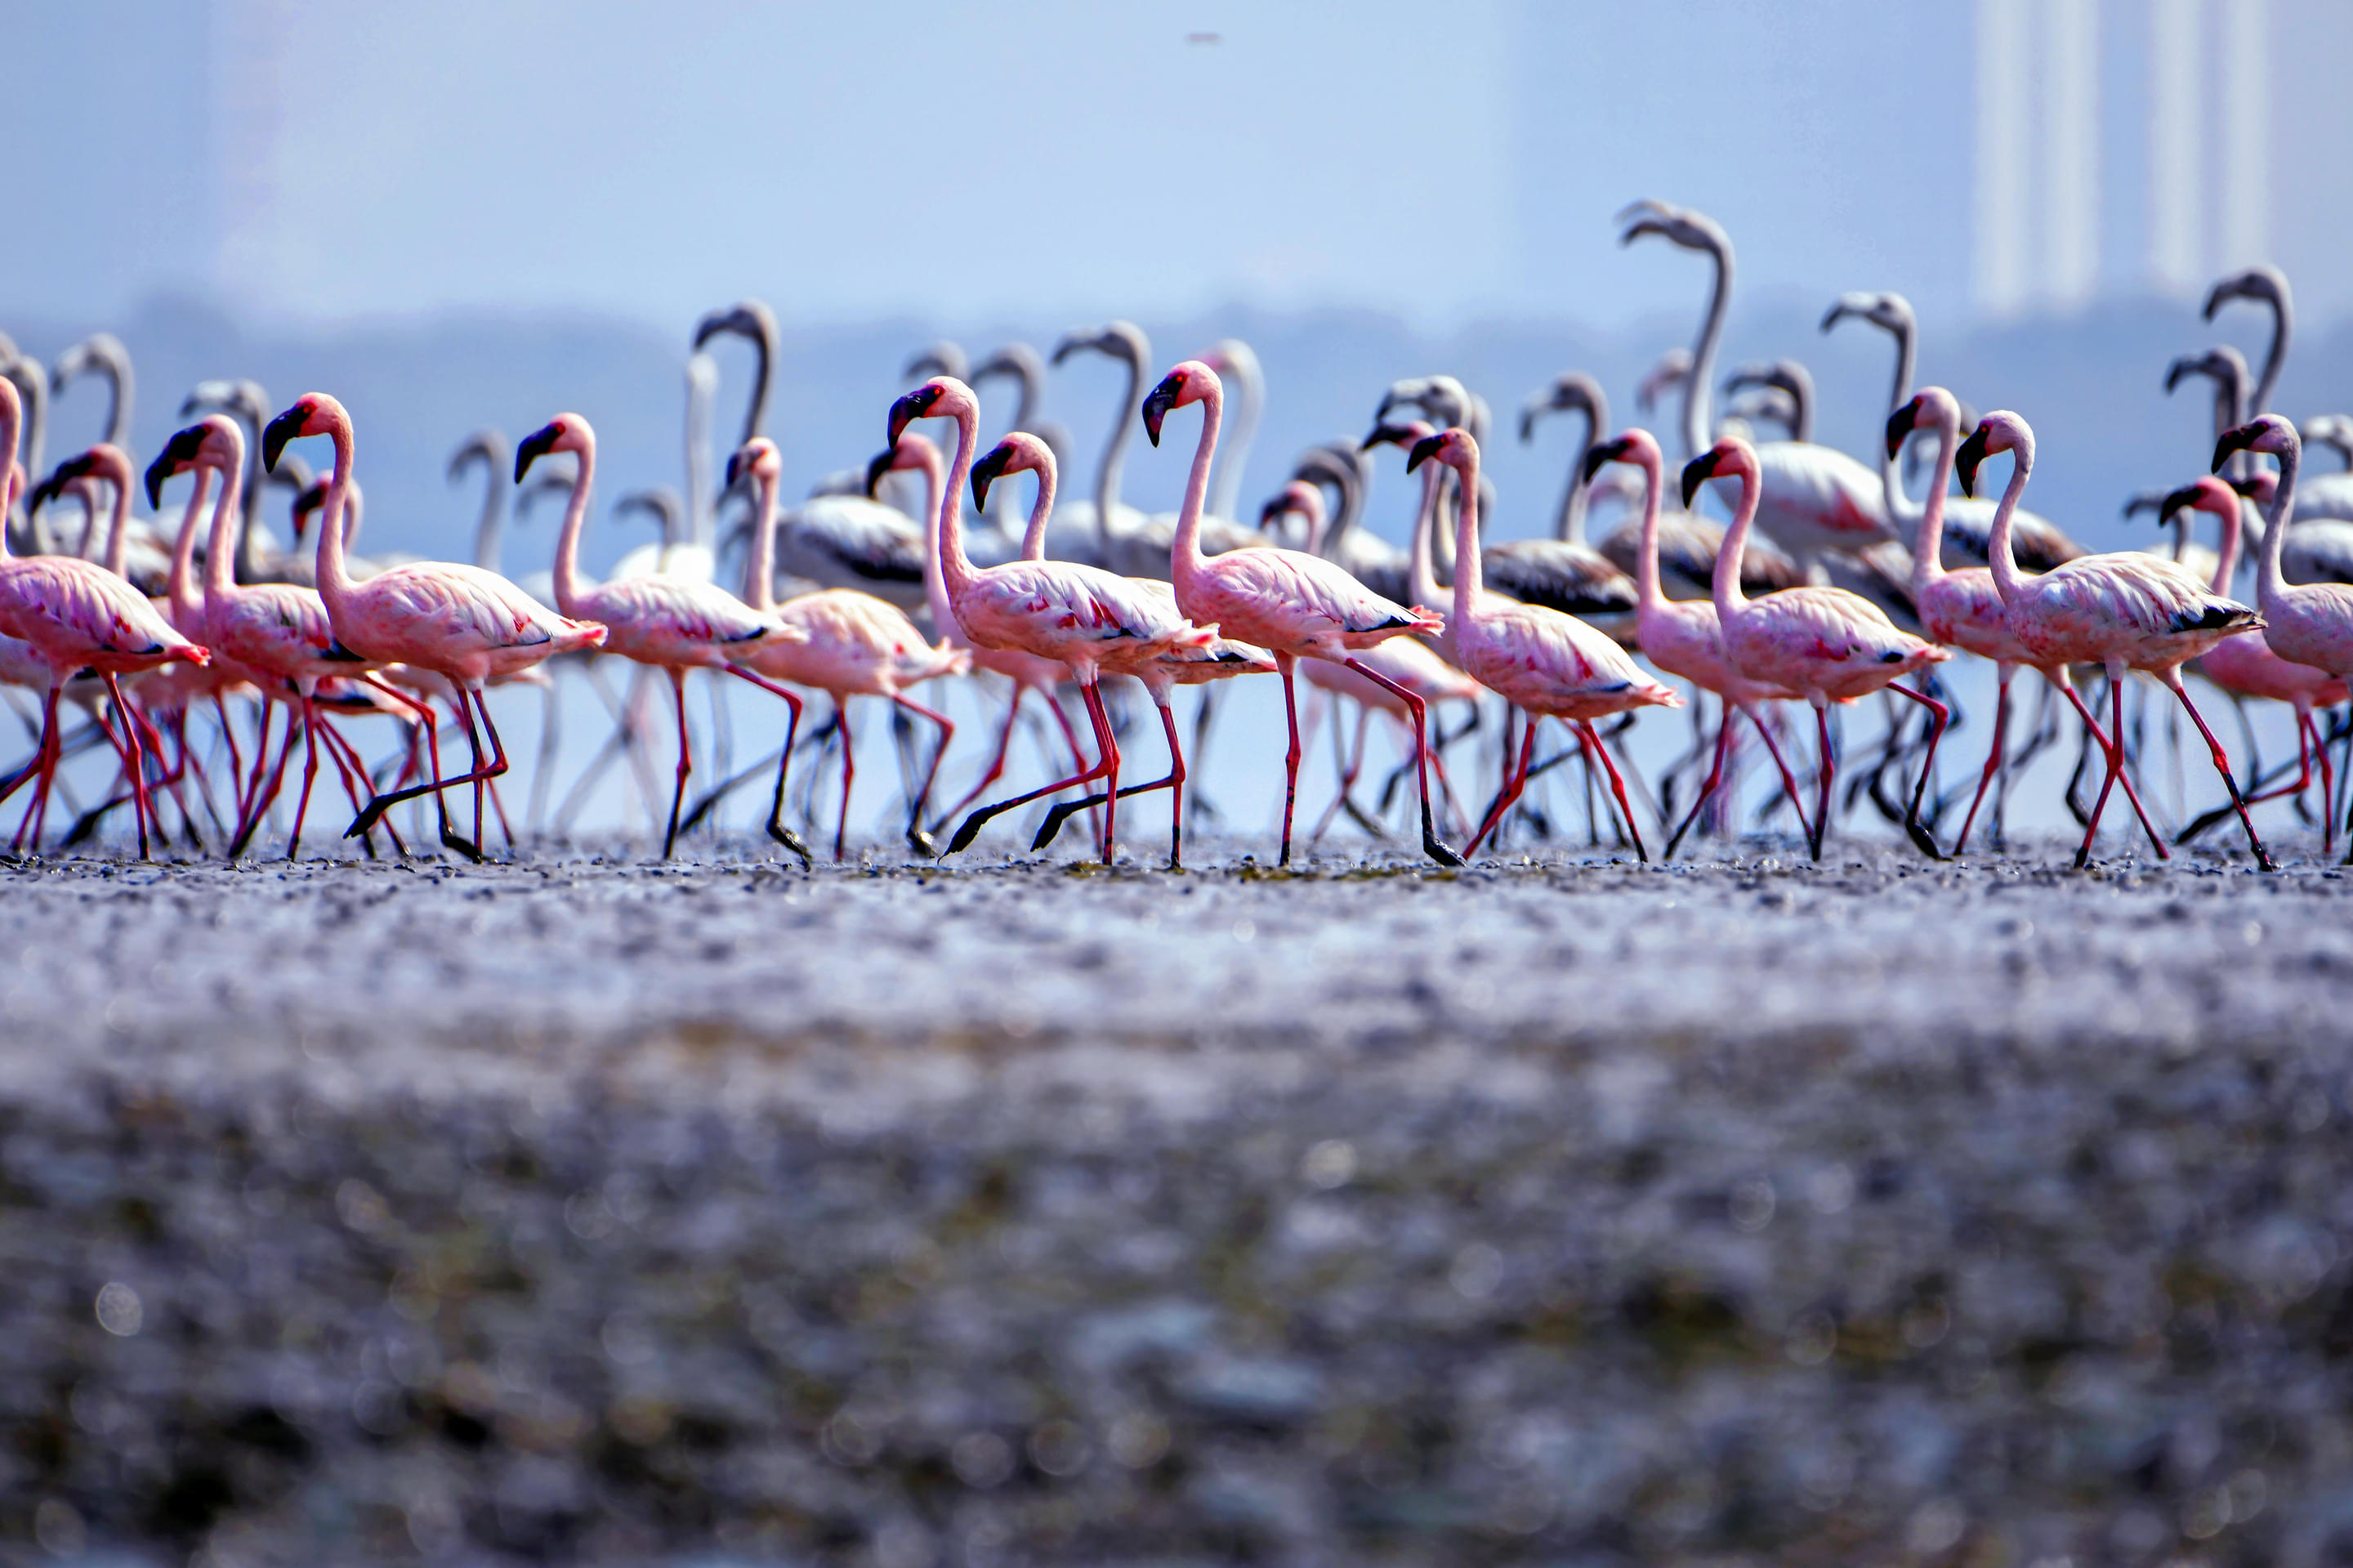 Thane Creek Flamingo Sanctuary Overview